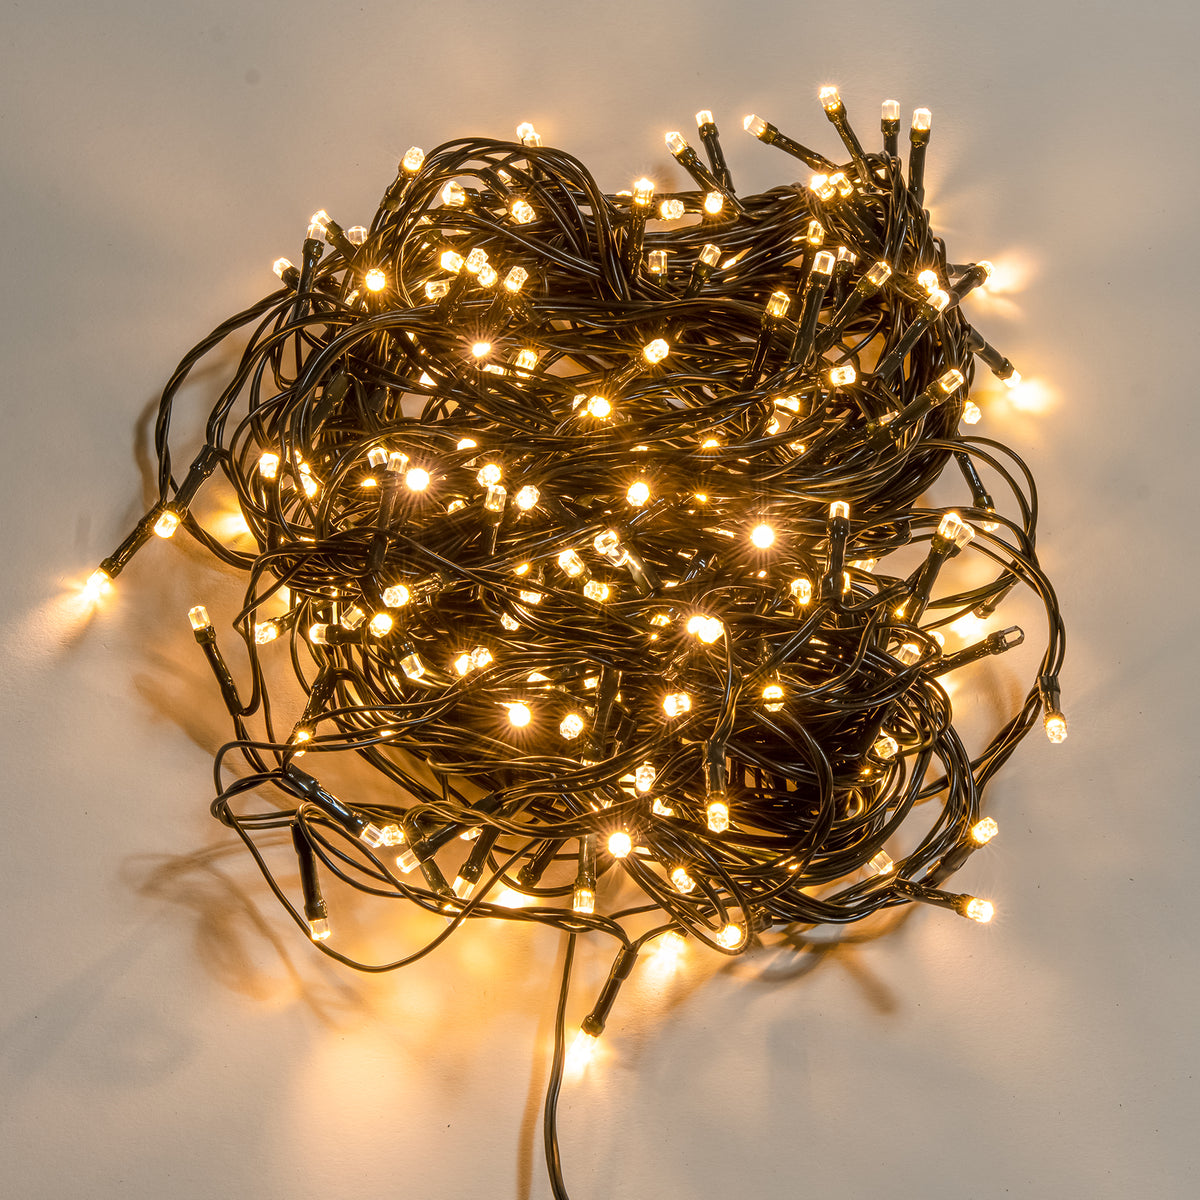 Warm White LED Multi-Function Christmas String Lights - 120, 240, 360, 480